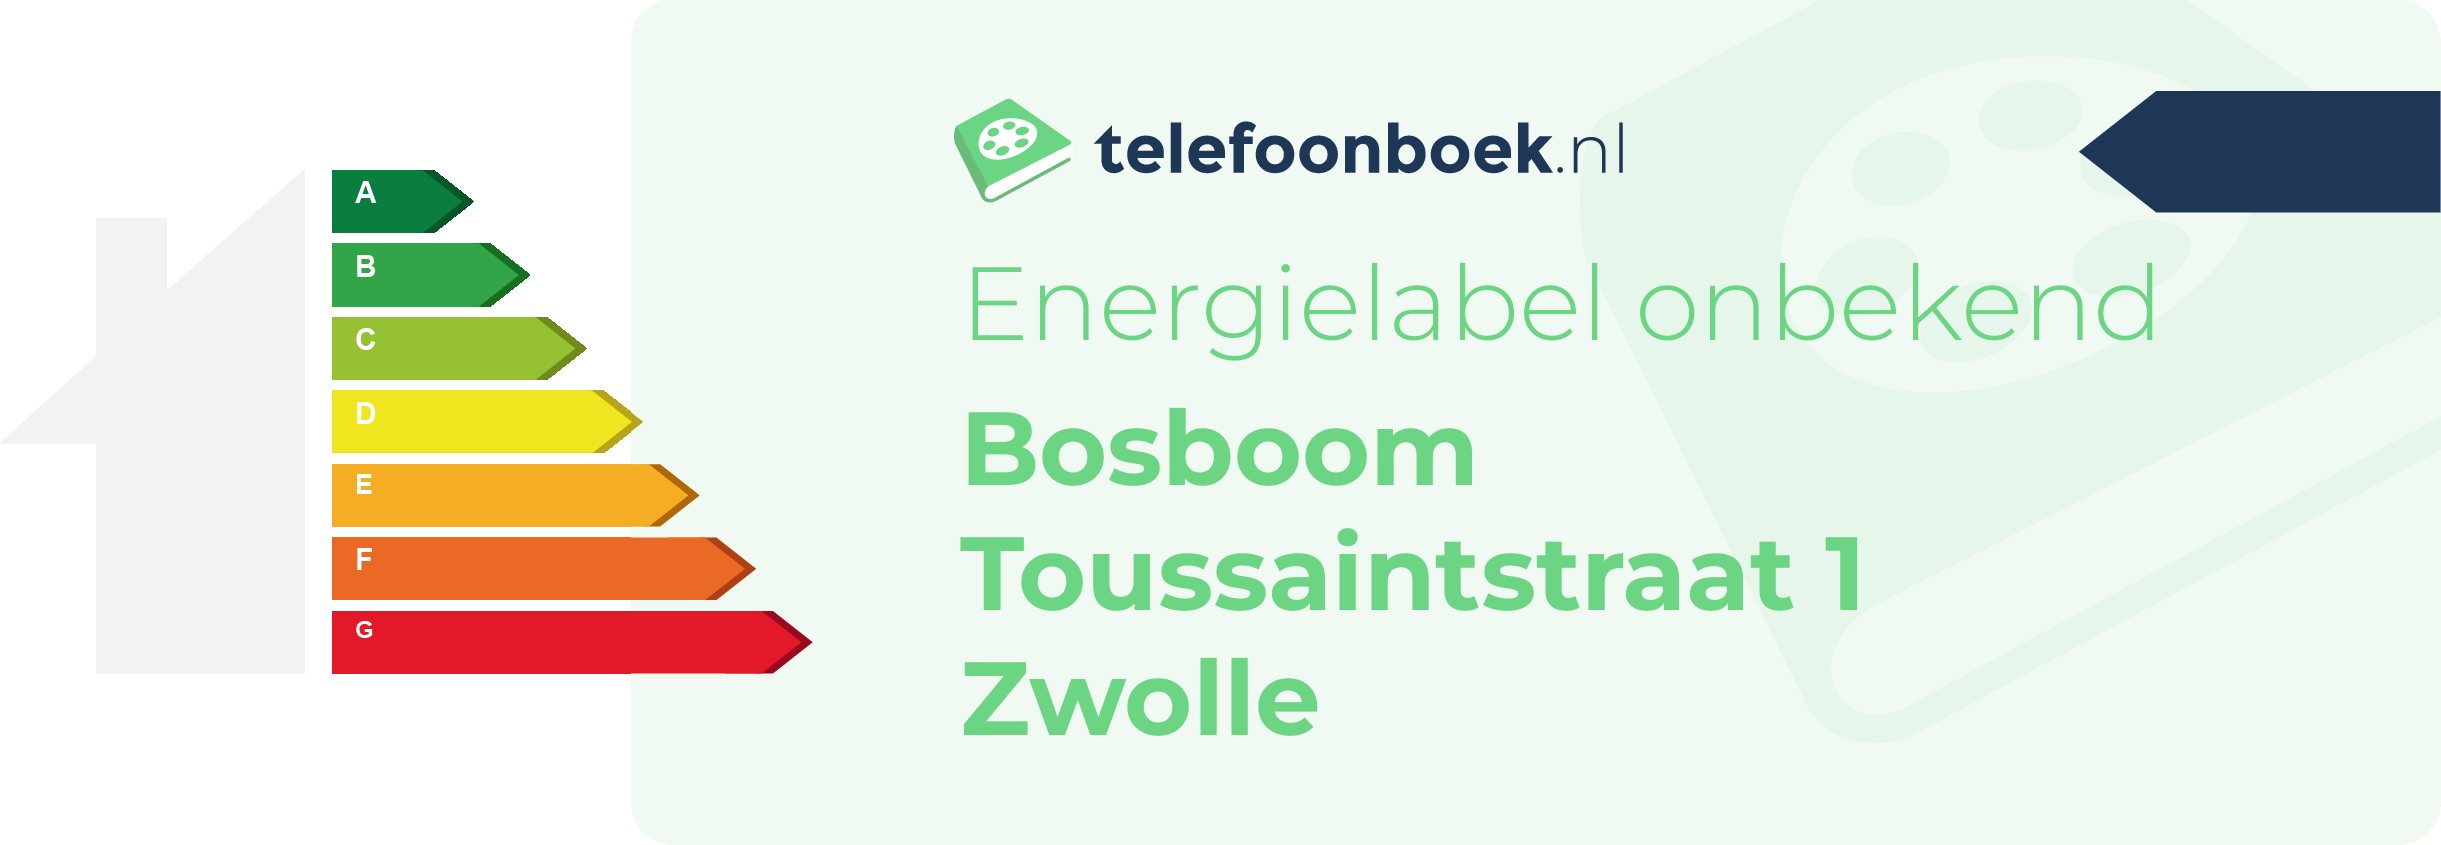 Energielabel Bosboom Toussaintstraat 1 Zwolle